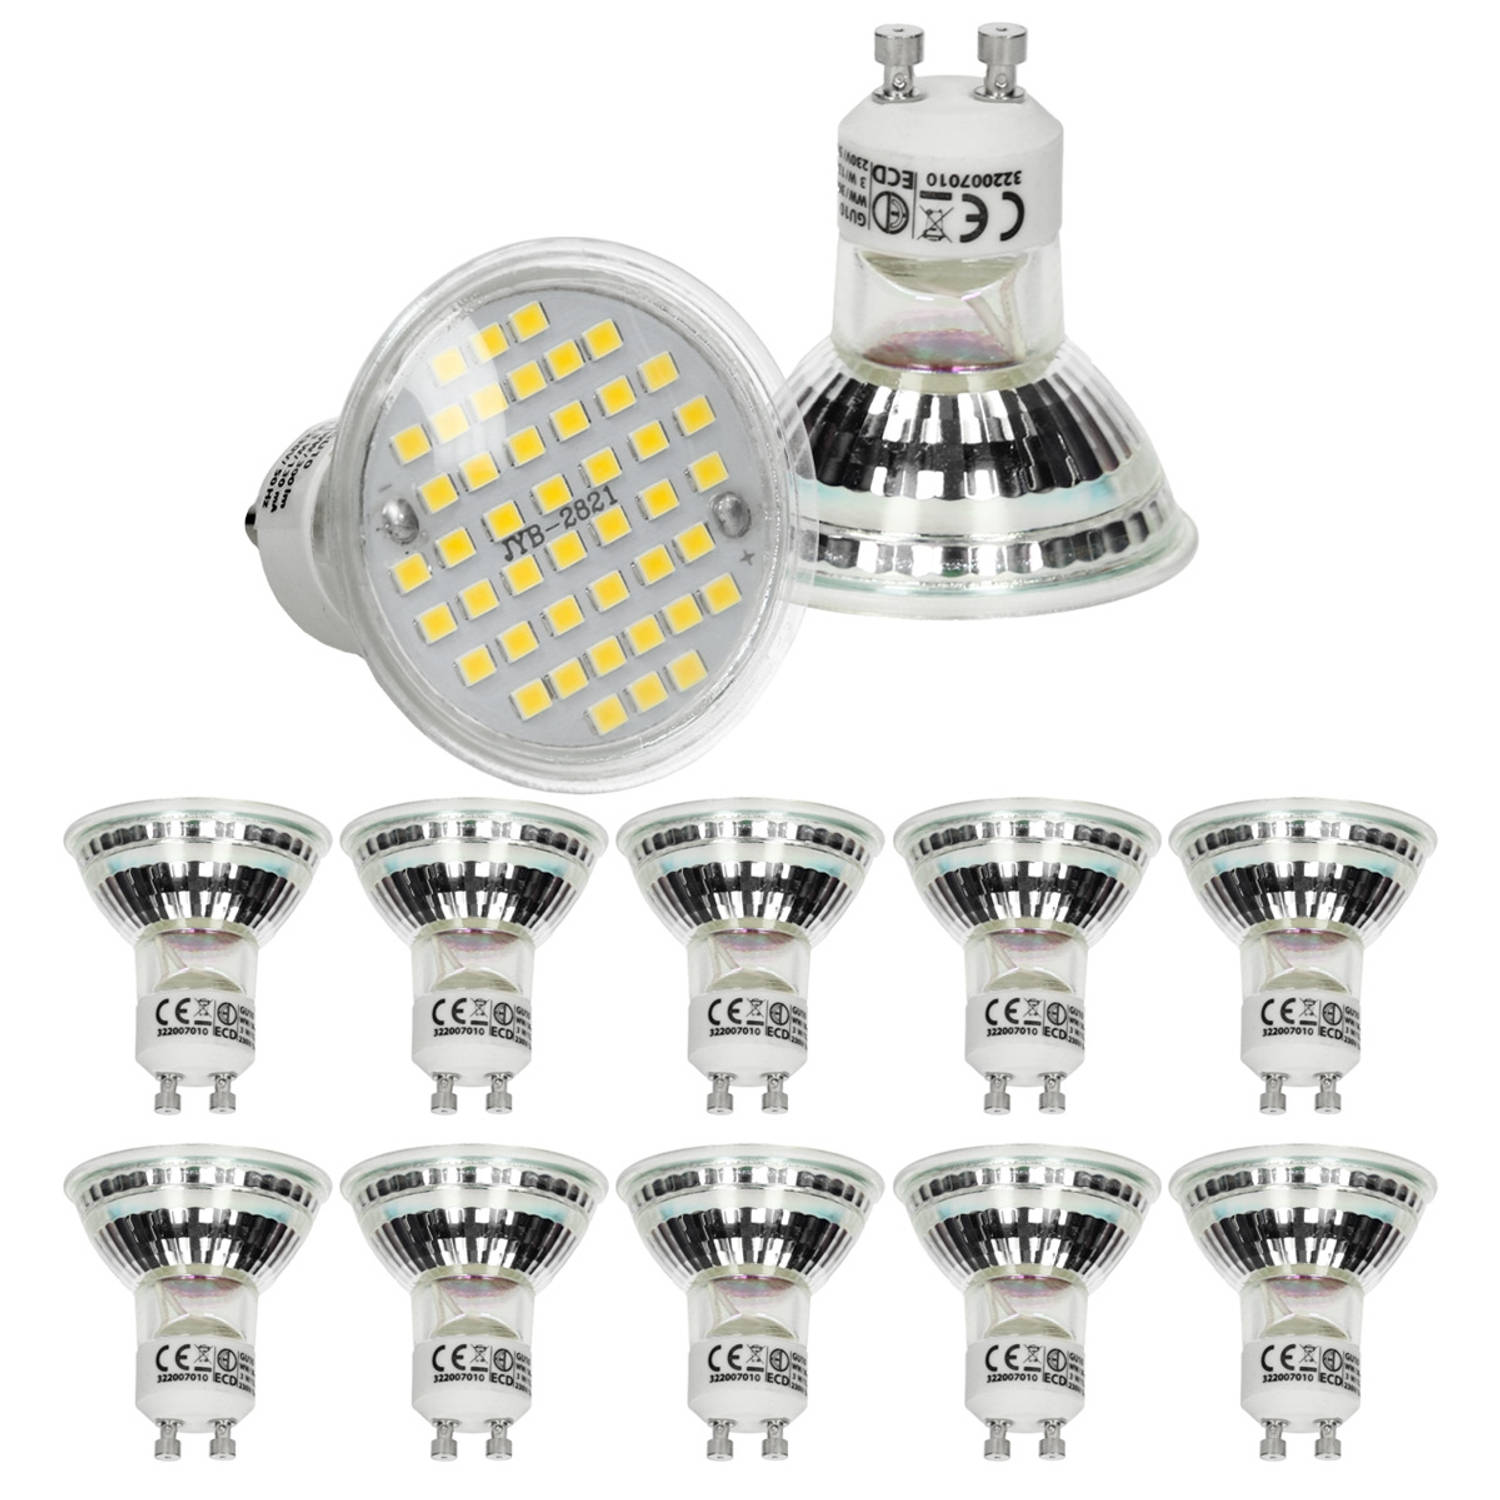 ECD Germany 10er Set LED-lamp GU10 44SMD Spot 3W - vervangen van 25W-lamp - gemaakt van glas - 251 lumen - warmwit 3000K